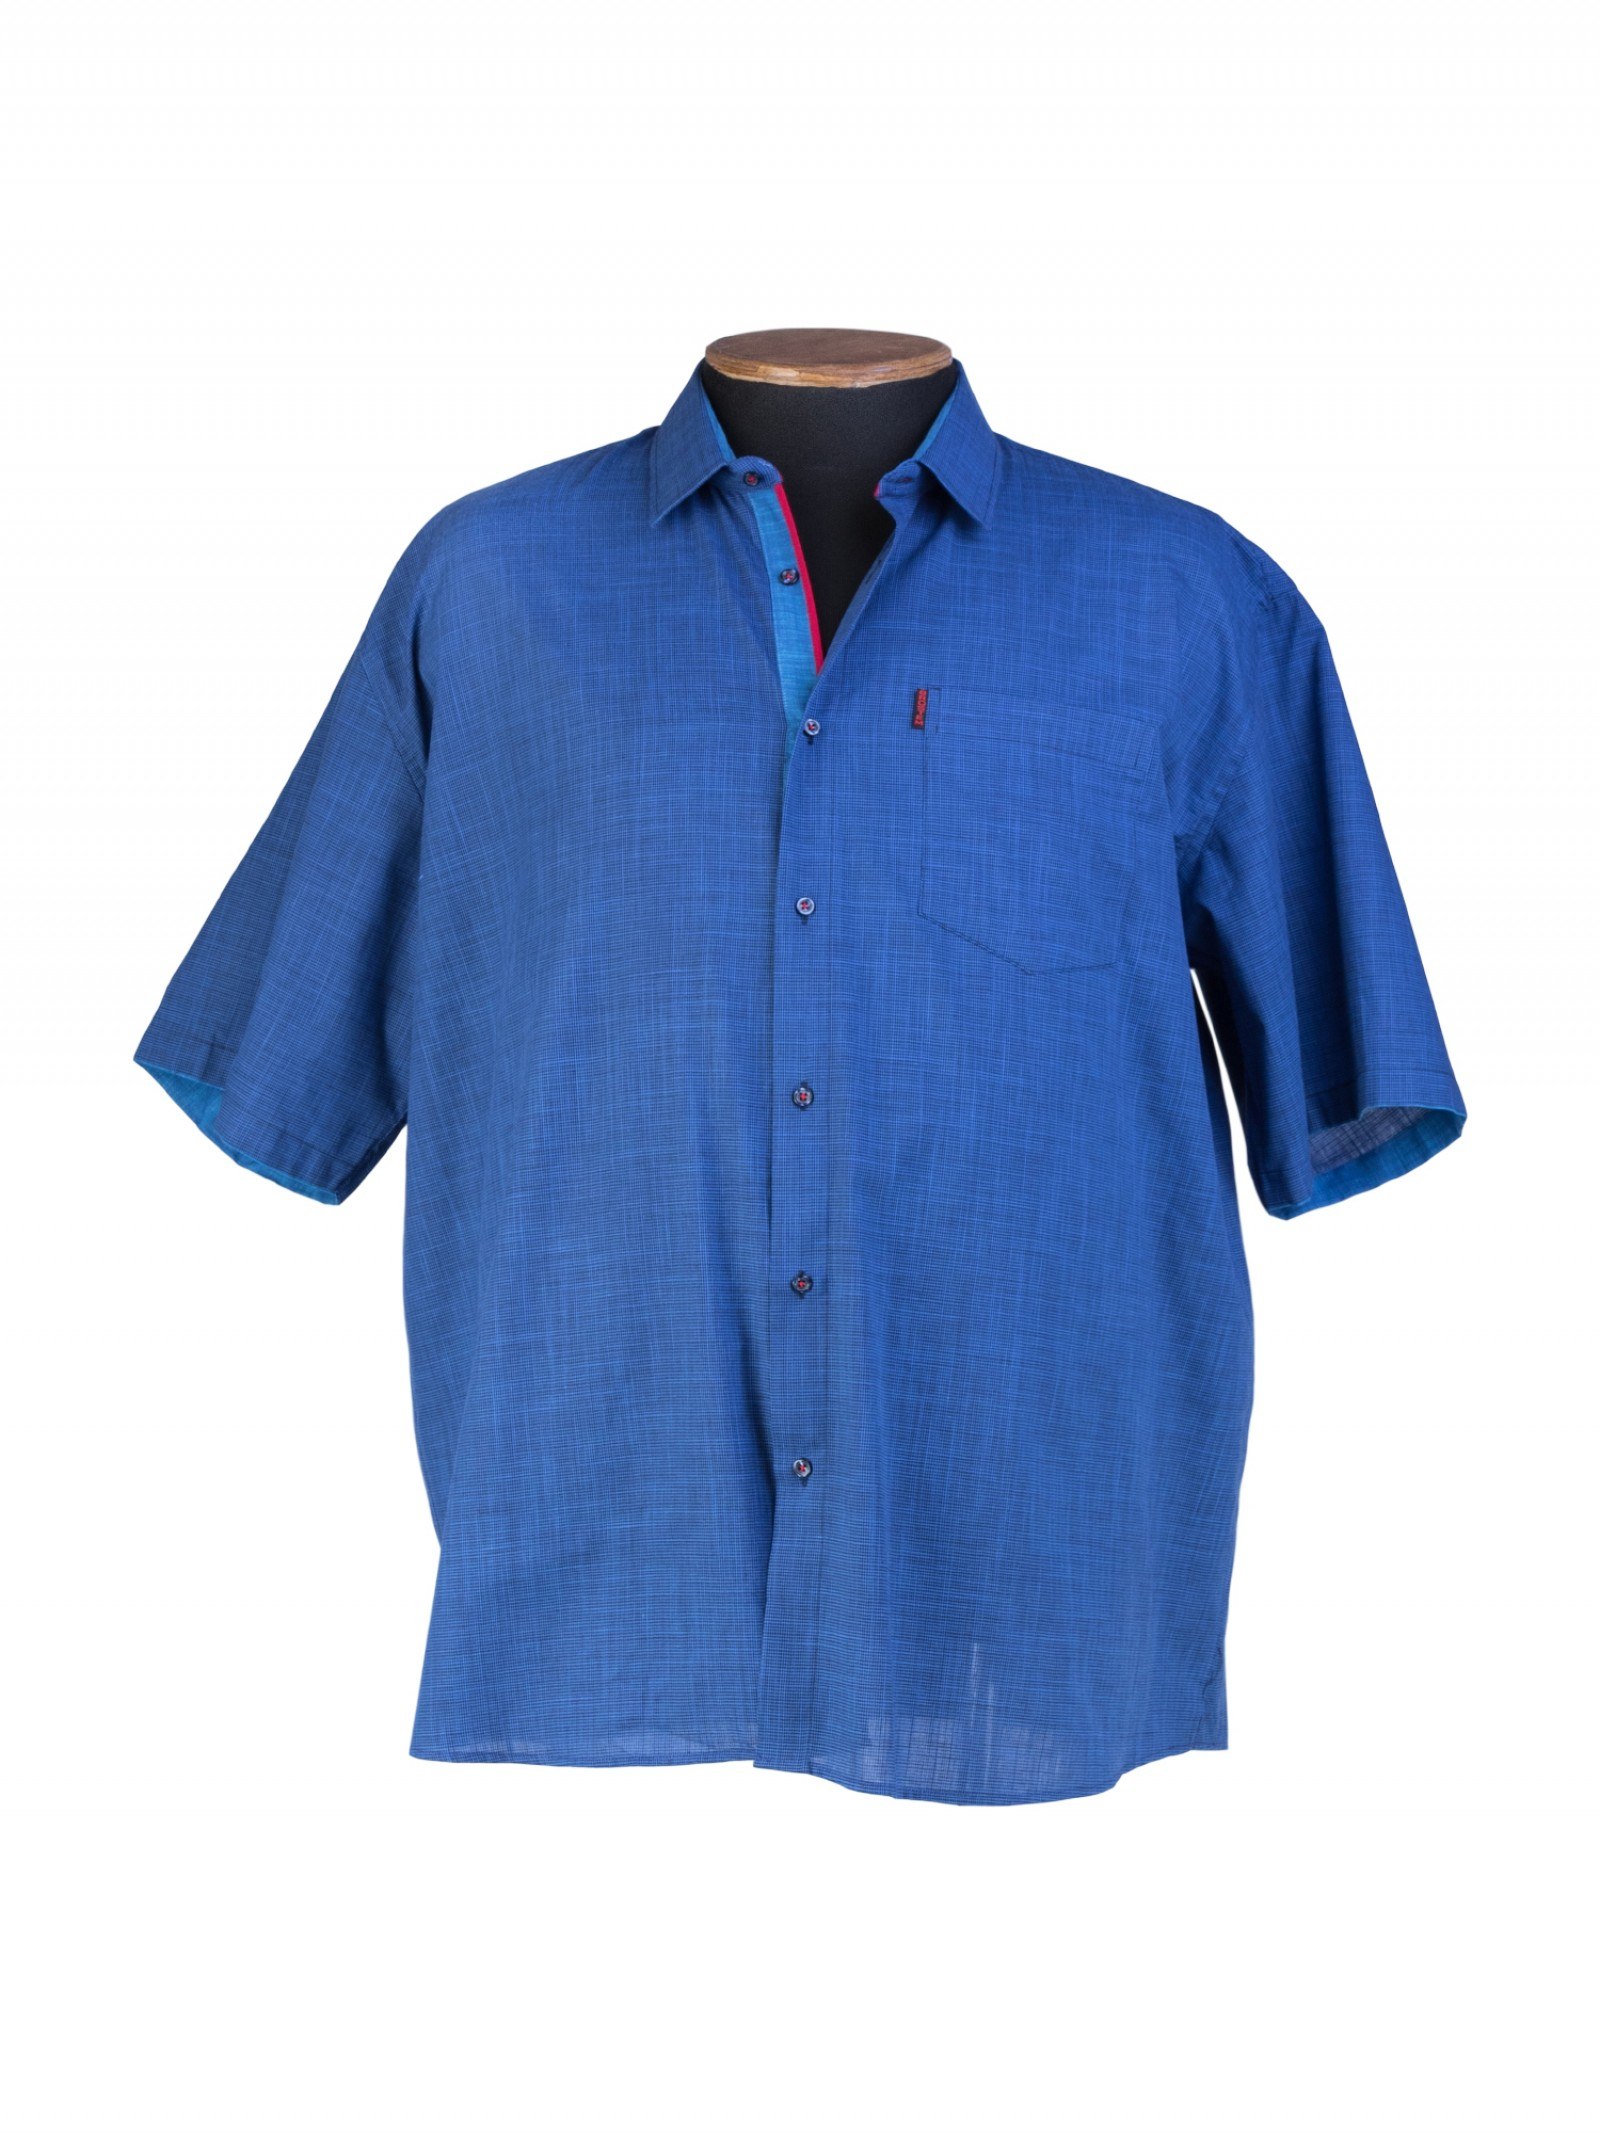 Рубашки мужские купить недорого москва. Рубашка мужская. Синяя рубашка мужская. Голубая рубашка с коротким рукавом. Рубашка с коротким рукавом мужская.